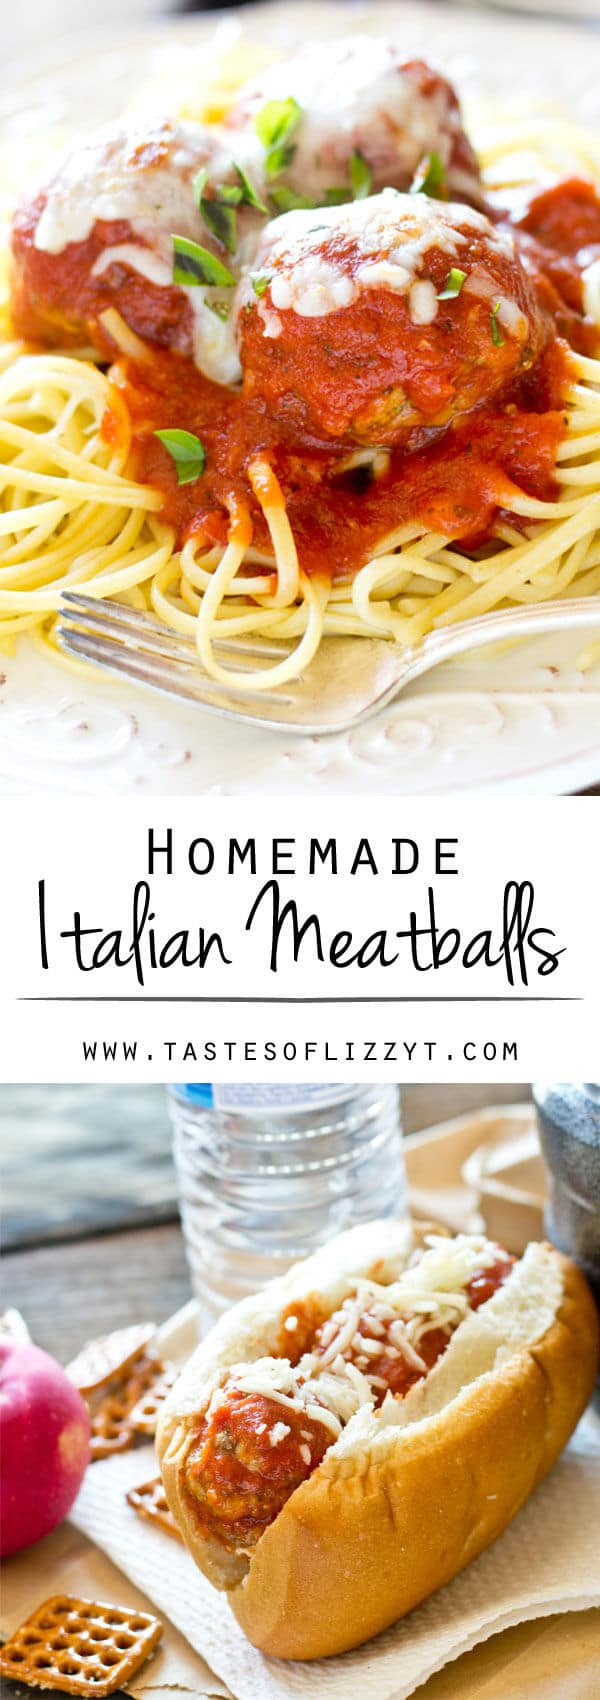 Italian Meatballs Recipes
 Homemade Italian Meatballs Recipe for Authentic Italian